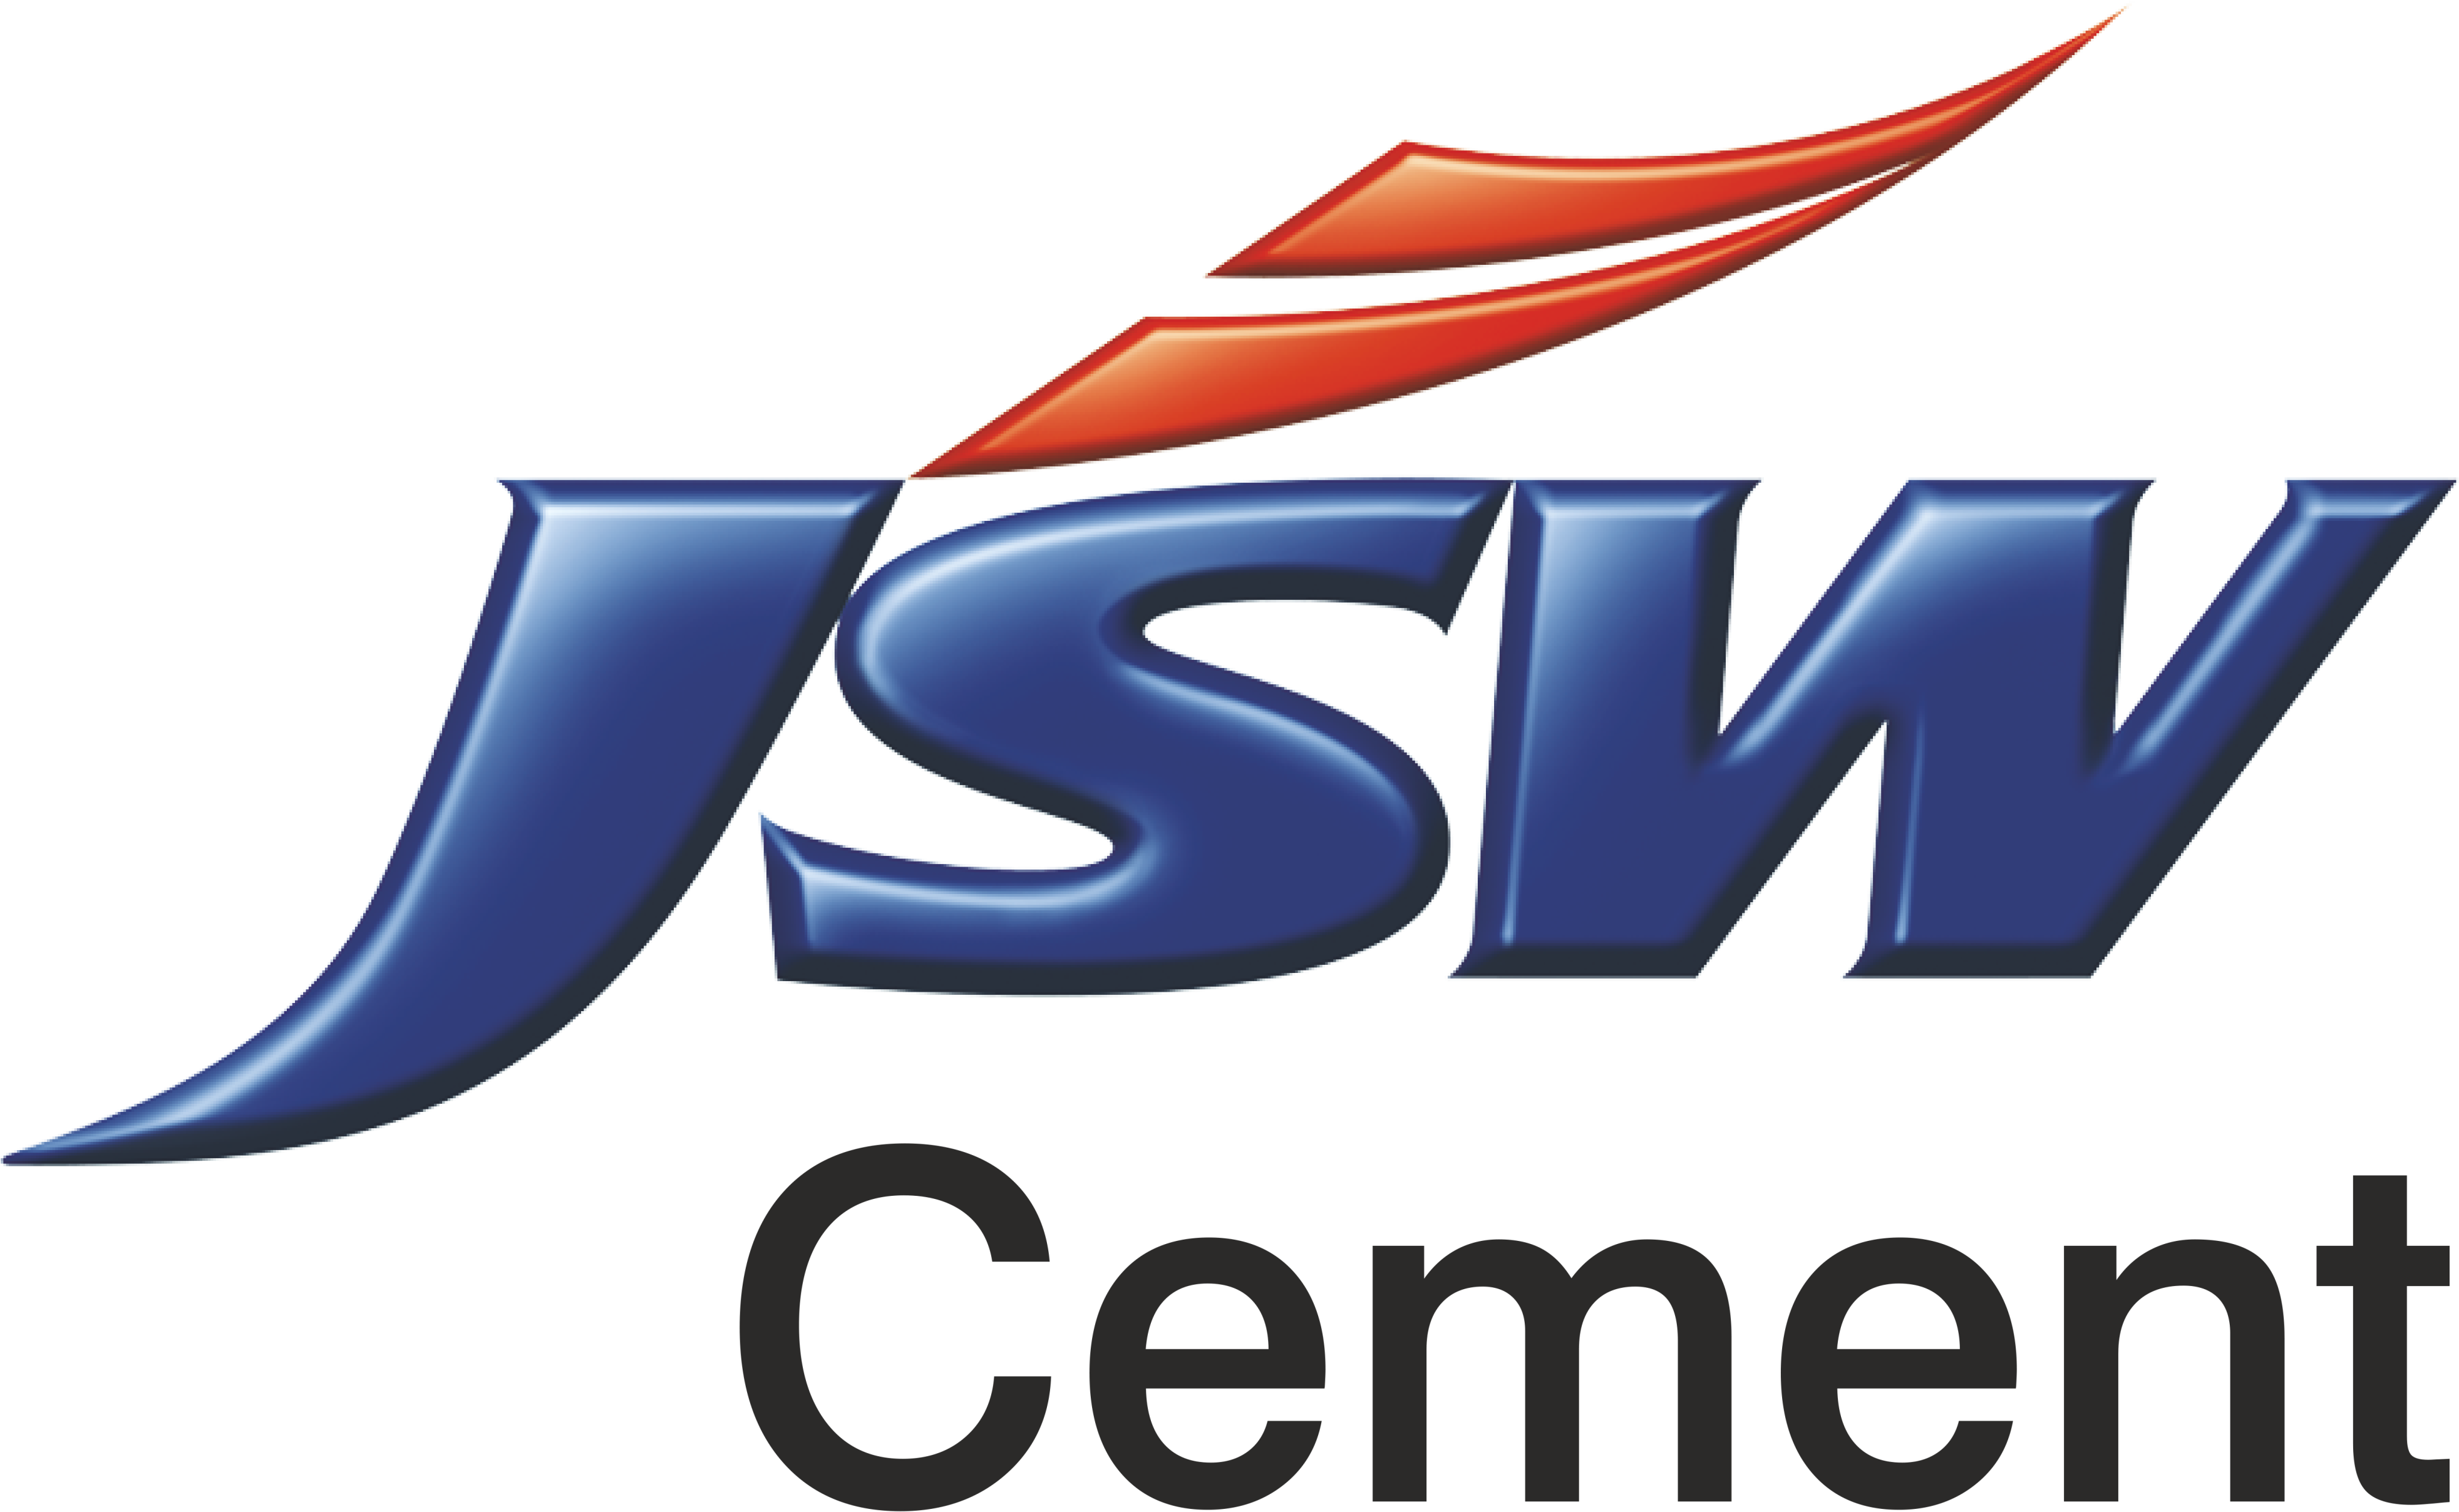 JSW Steel Logo PNG - FREE Vector Design - Cdr, Ai, EPS, PNG, SVG